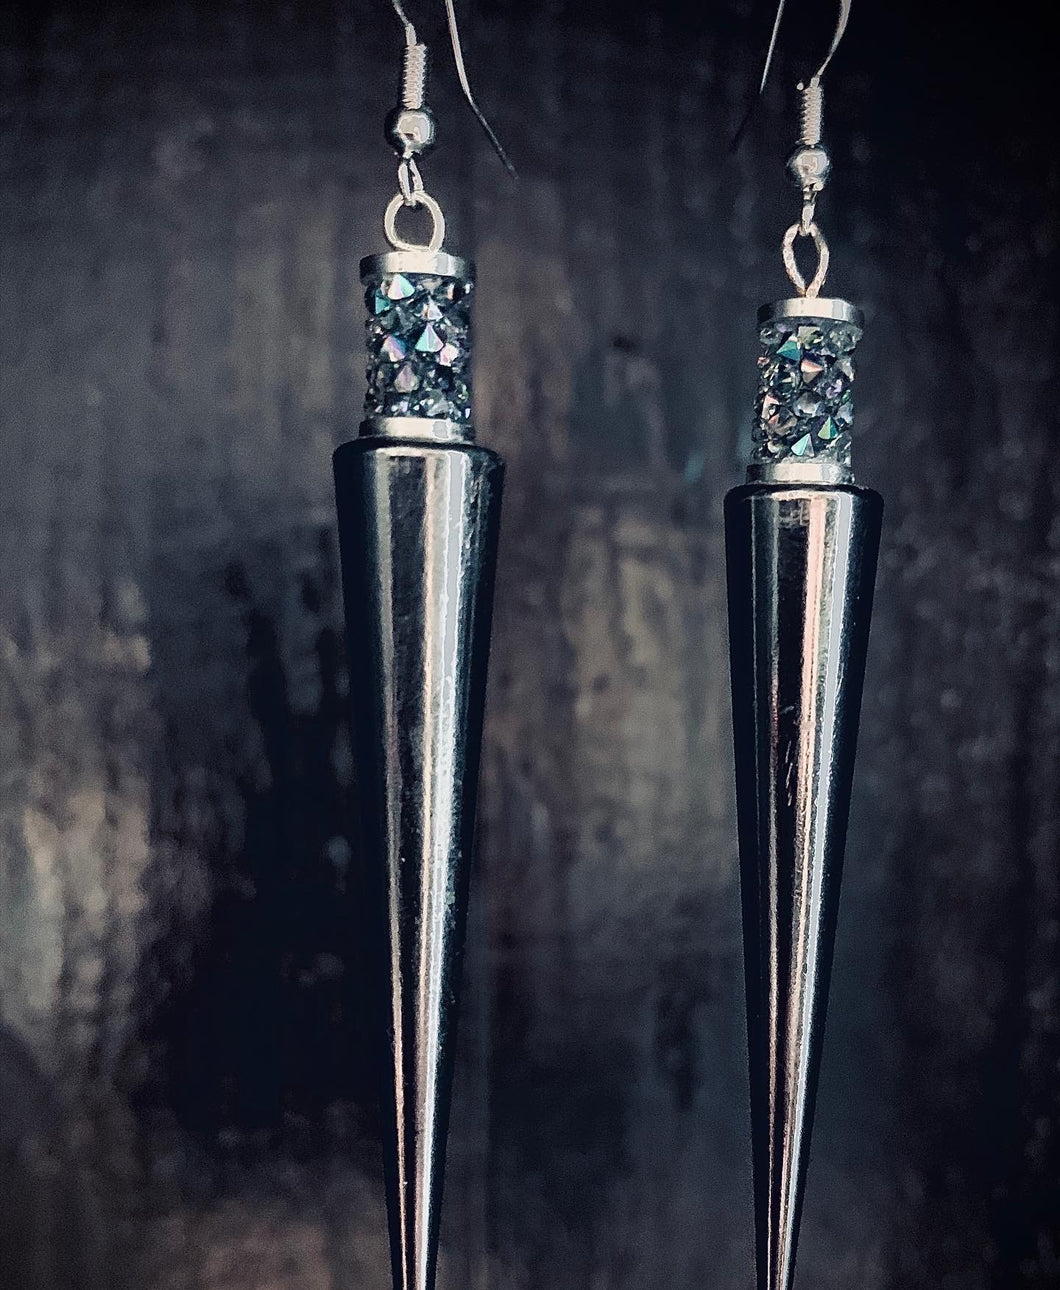 Jackie Earrings with Swarovski Crystals